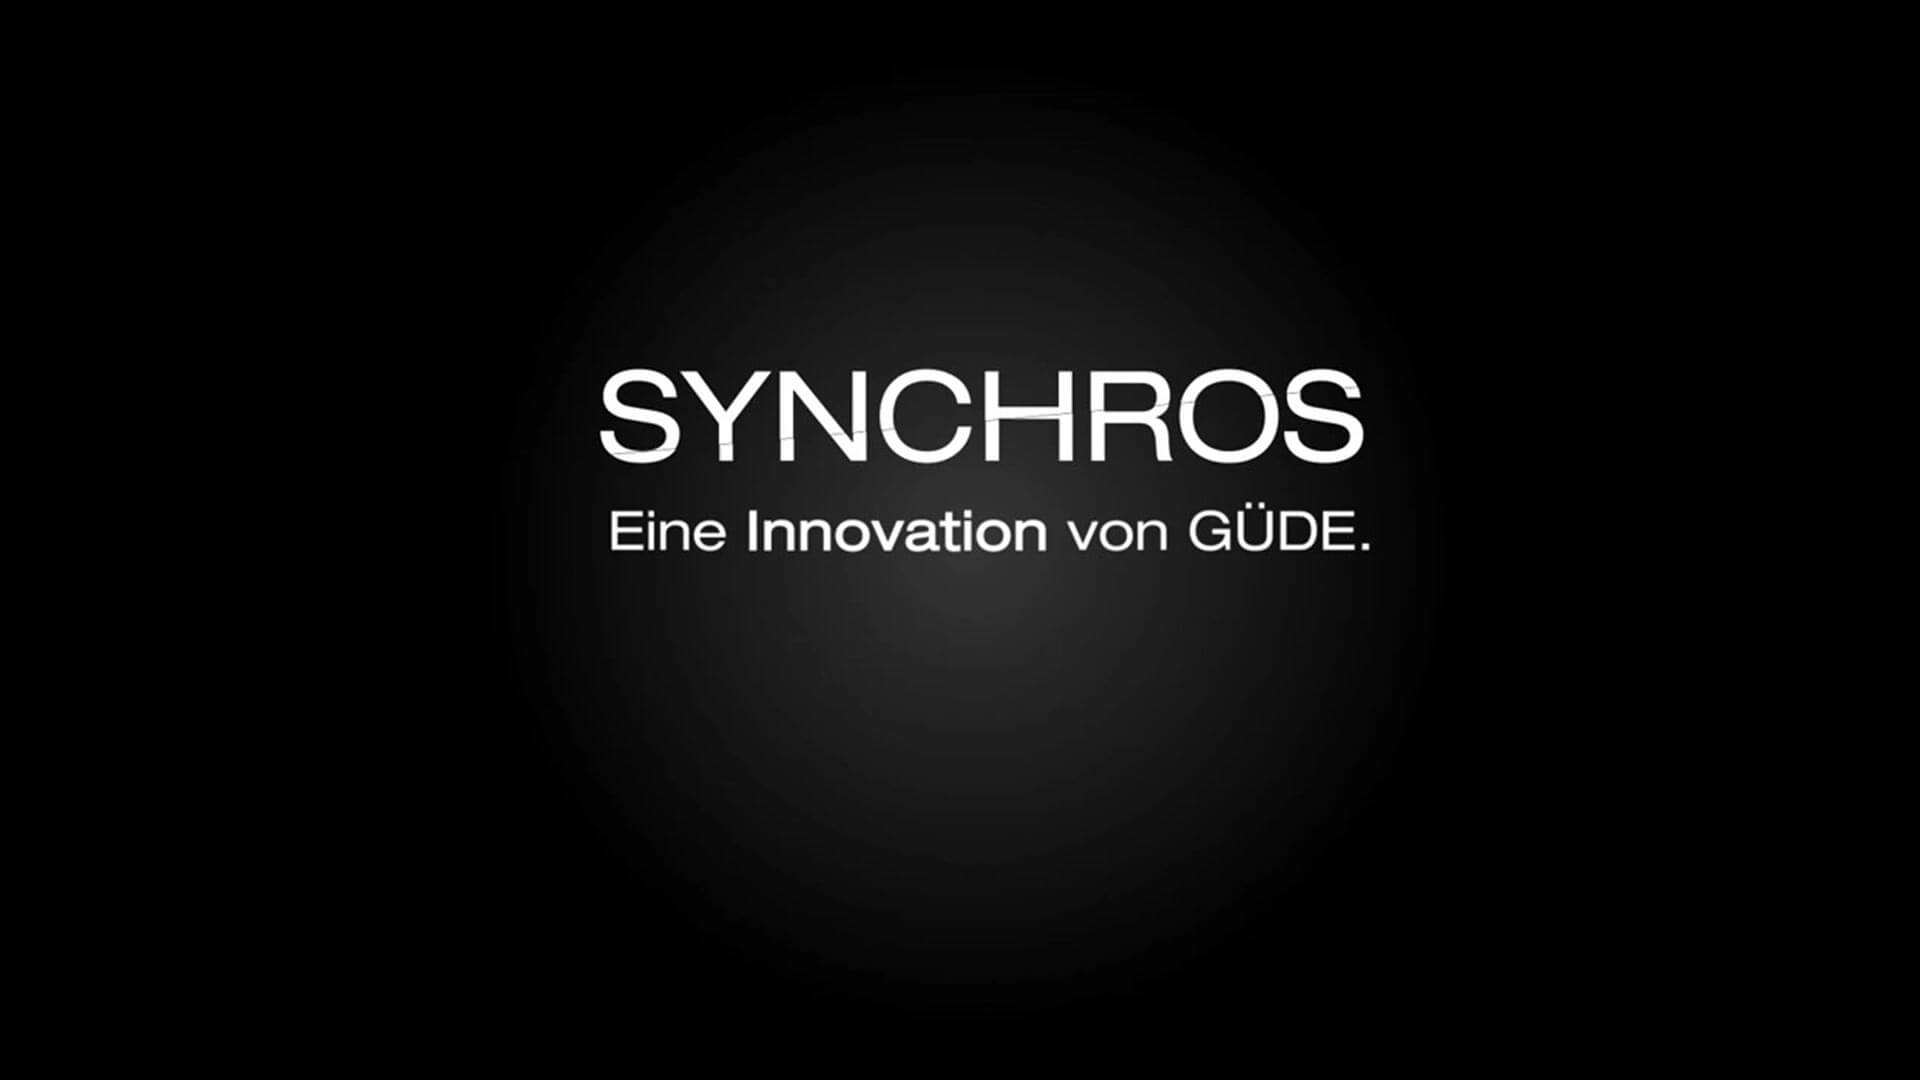 guede-synchros-video-image-preparation-knife